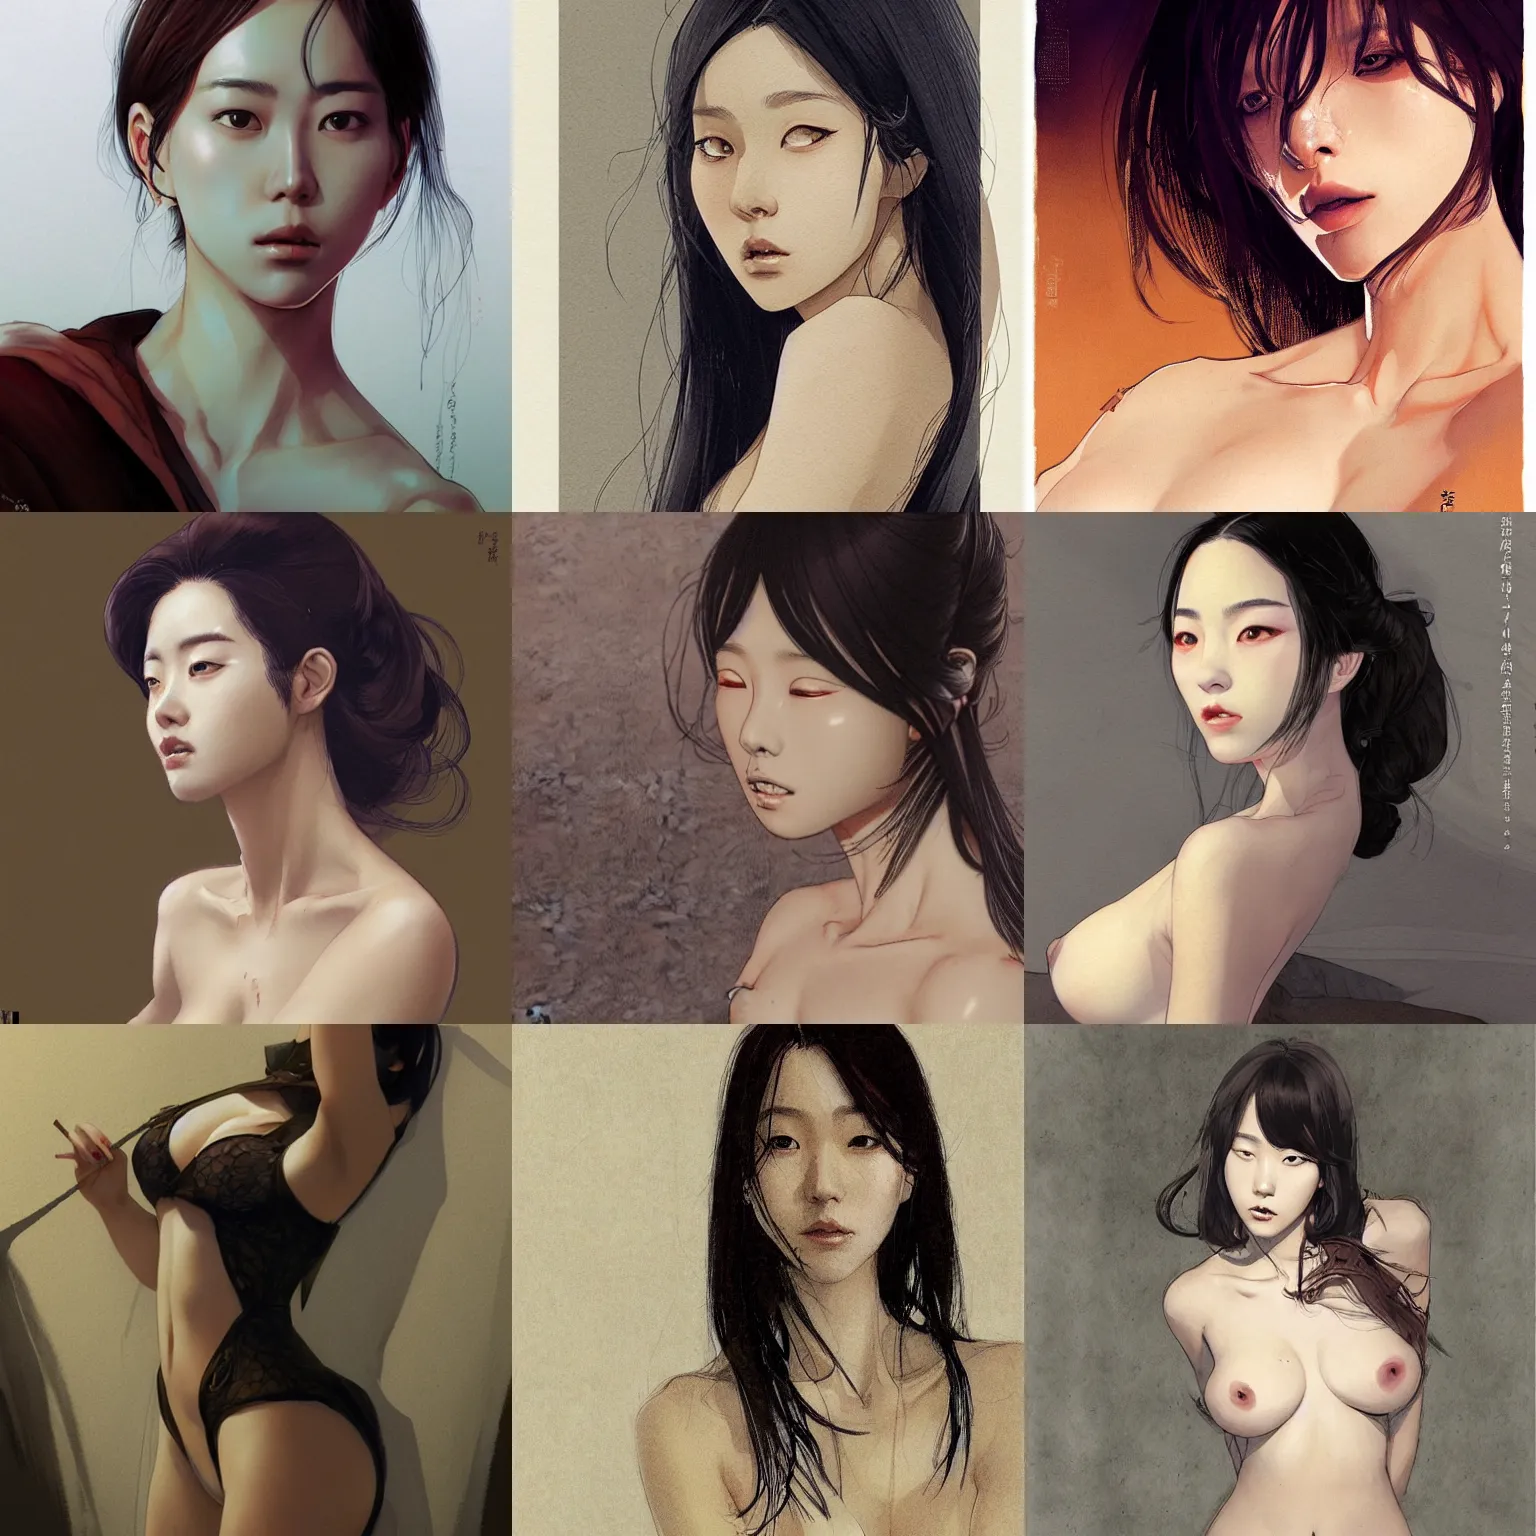 Prompt: portrait of hoyeon jung by milo manara gi, greg rutkowski, zabrocki, karlkka, jayison devadas, seductive look, beautiful